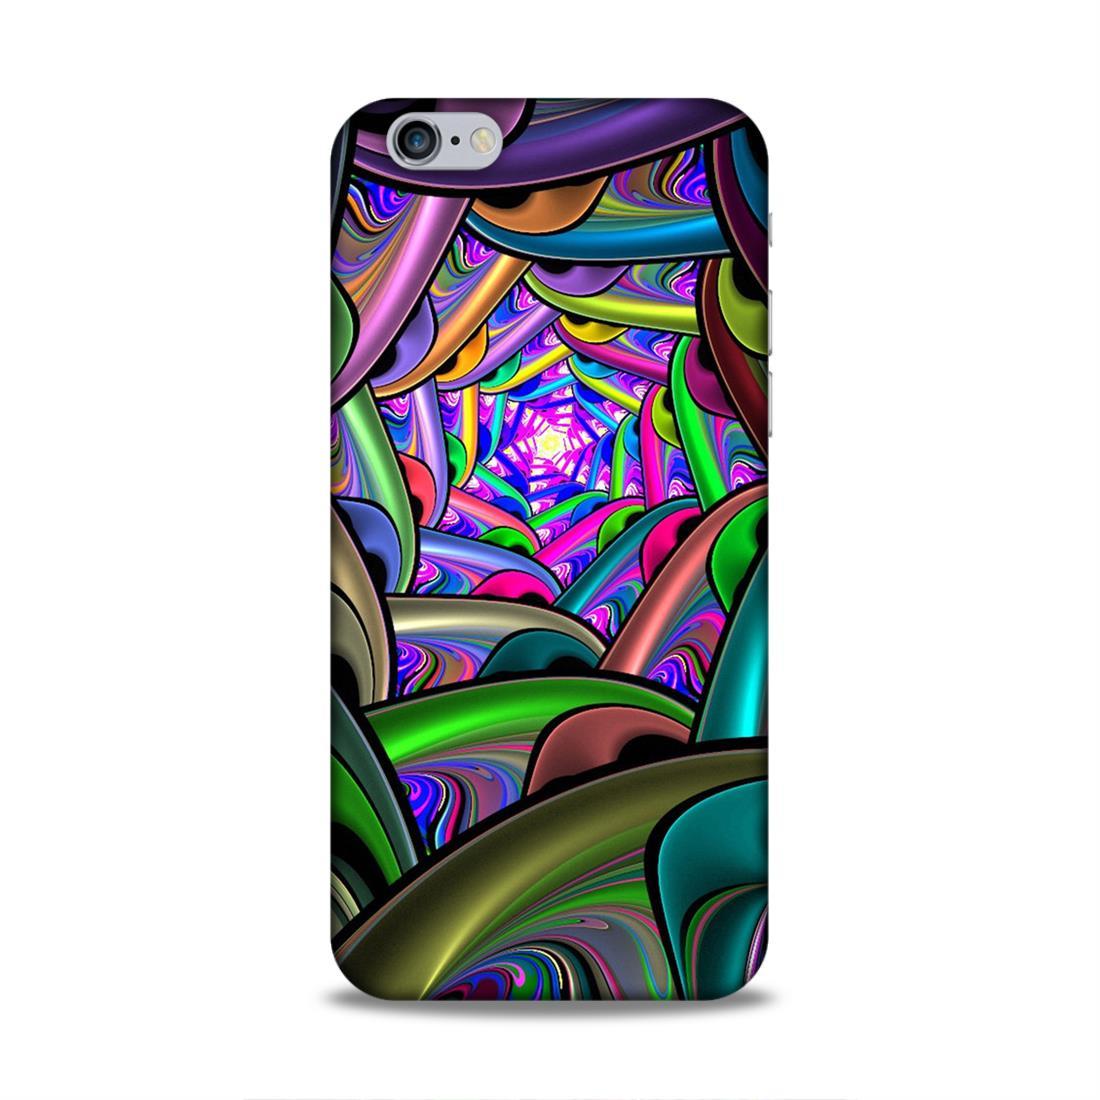 Deep Multicolour iPhone 6 Mobile Cover